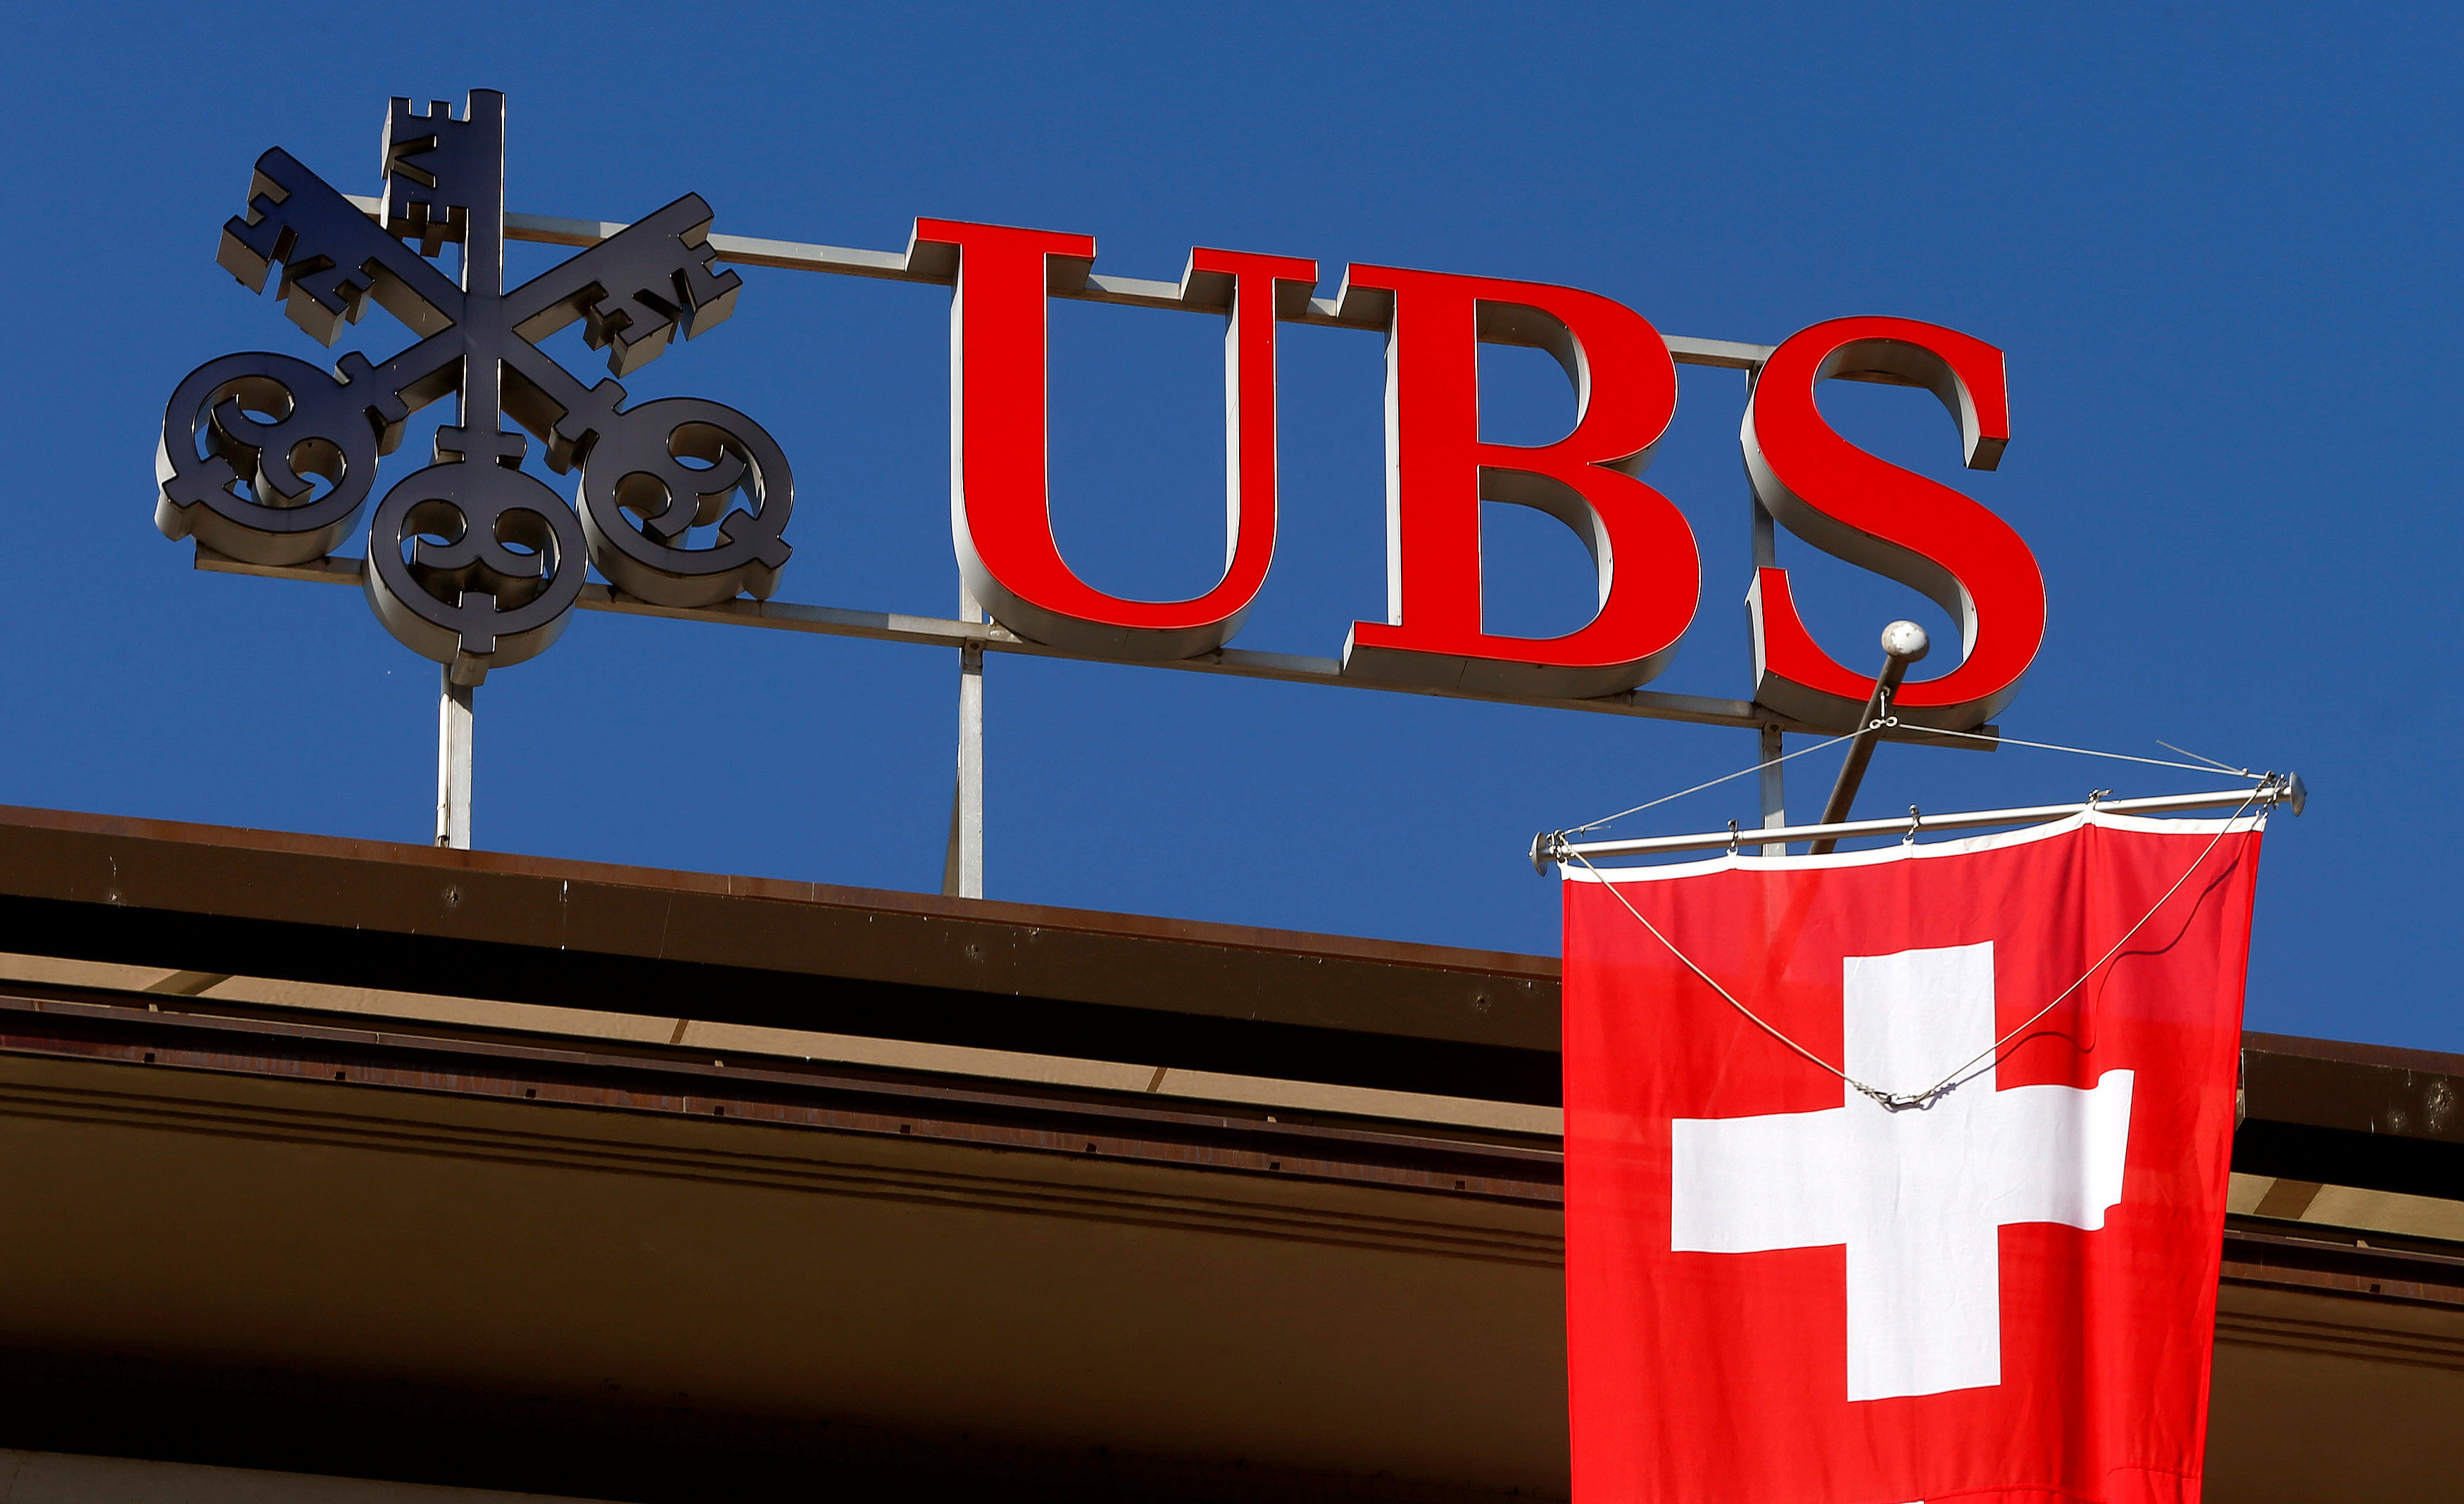 Банку ubs. Банк ЮБС Швейцария. Банки Швейцарии UBS. Швейцарского банка UBS. Логотип швейцарского банка.